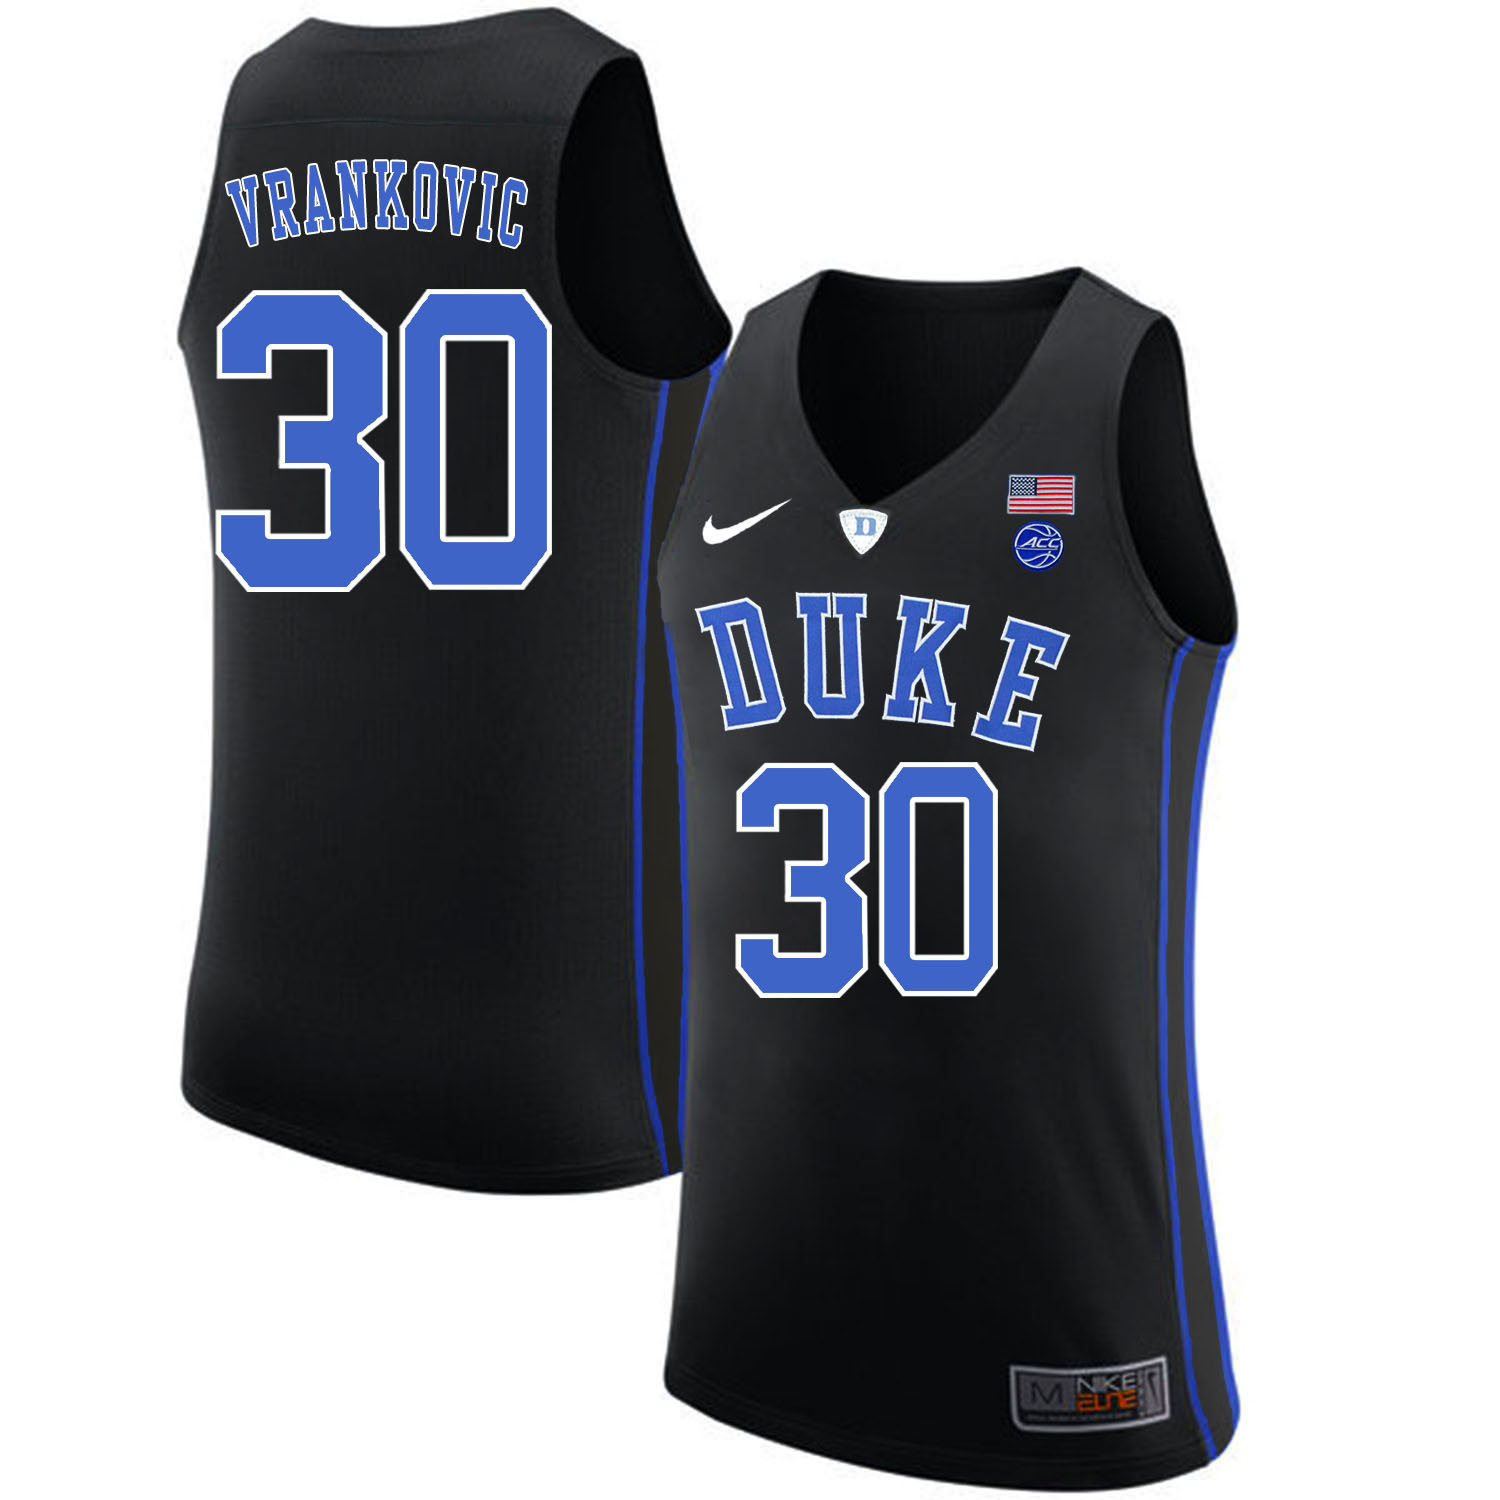 Duke Blue Devils 30 Antonio Vrankovic Black Nike College Basketball Jersey